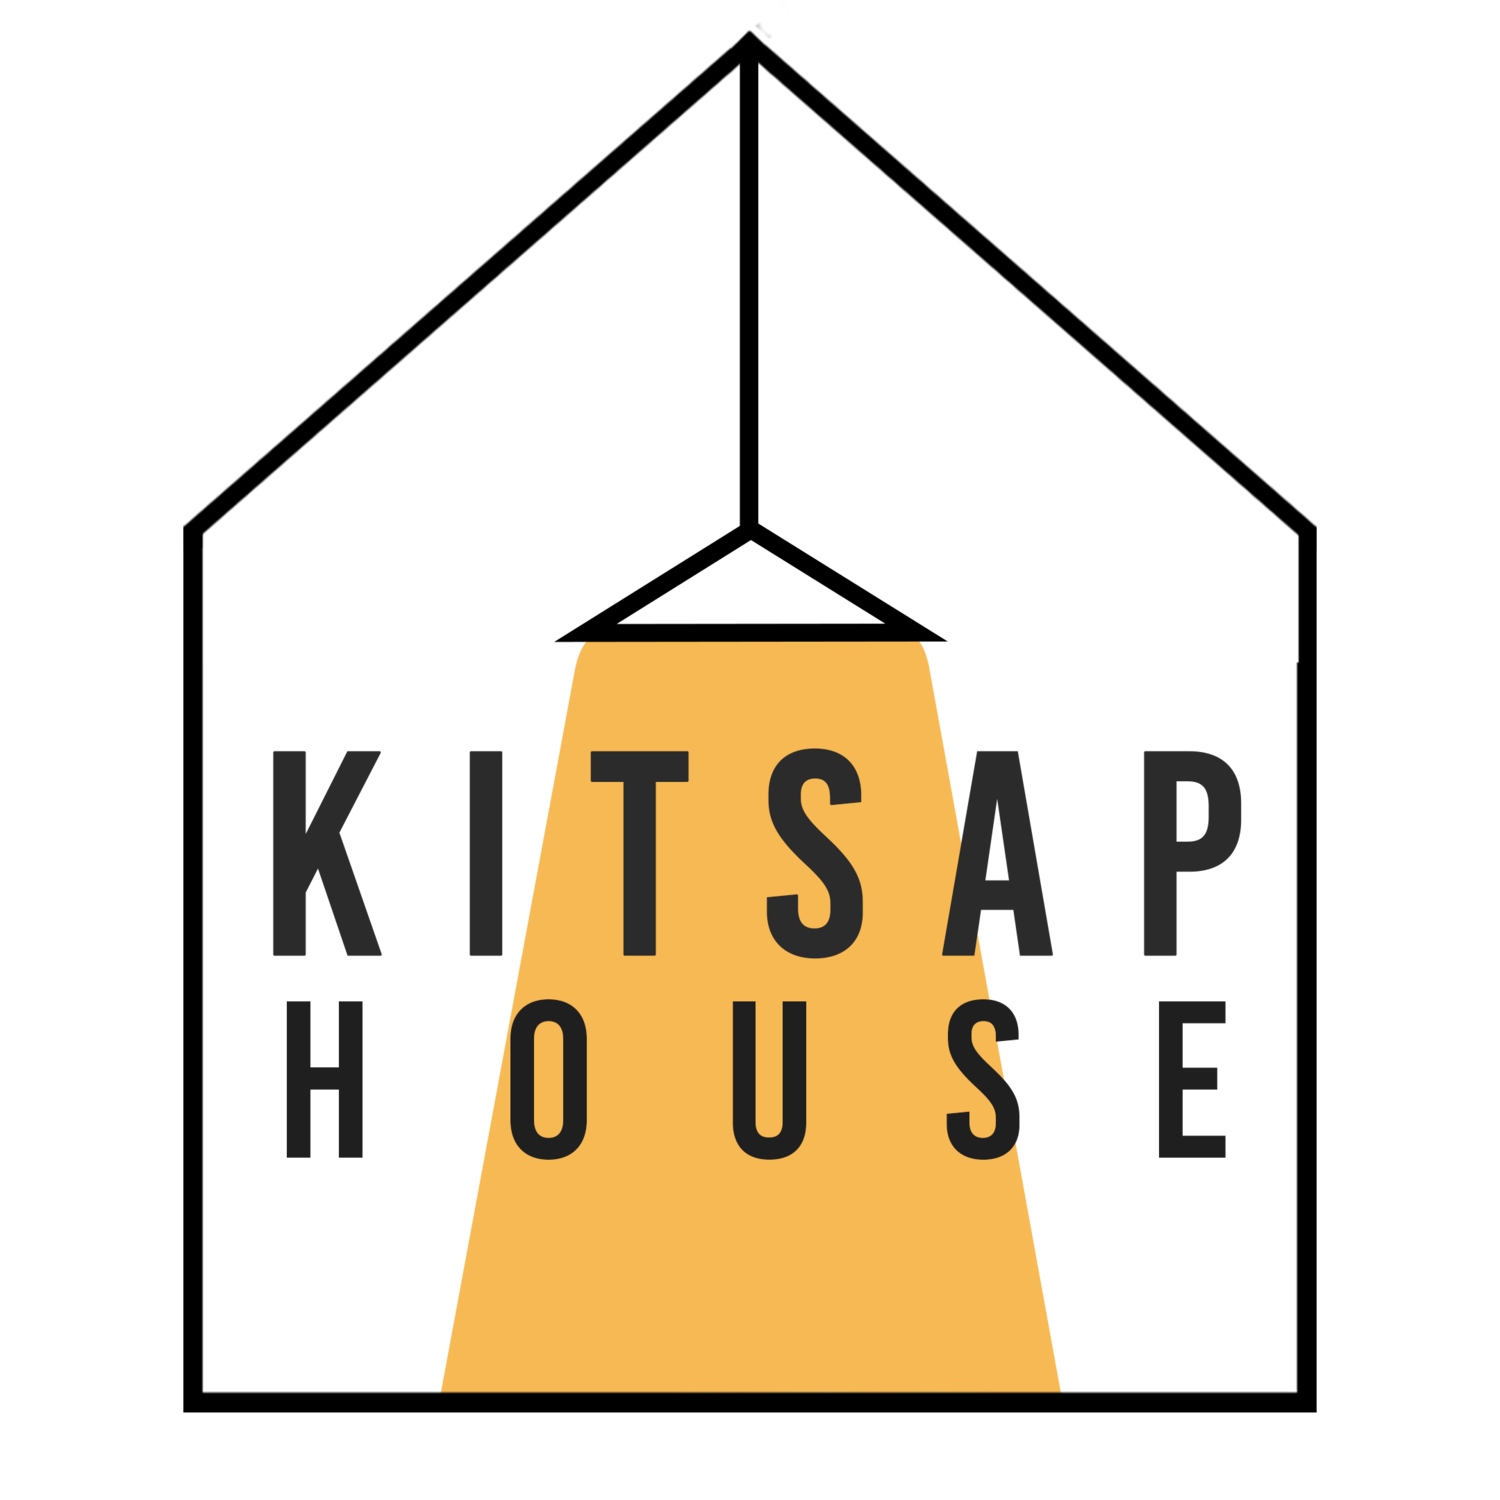 KITSAP HOUSE